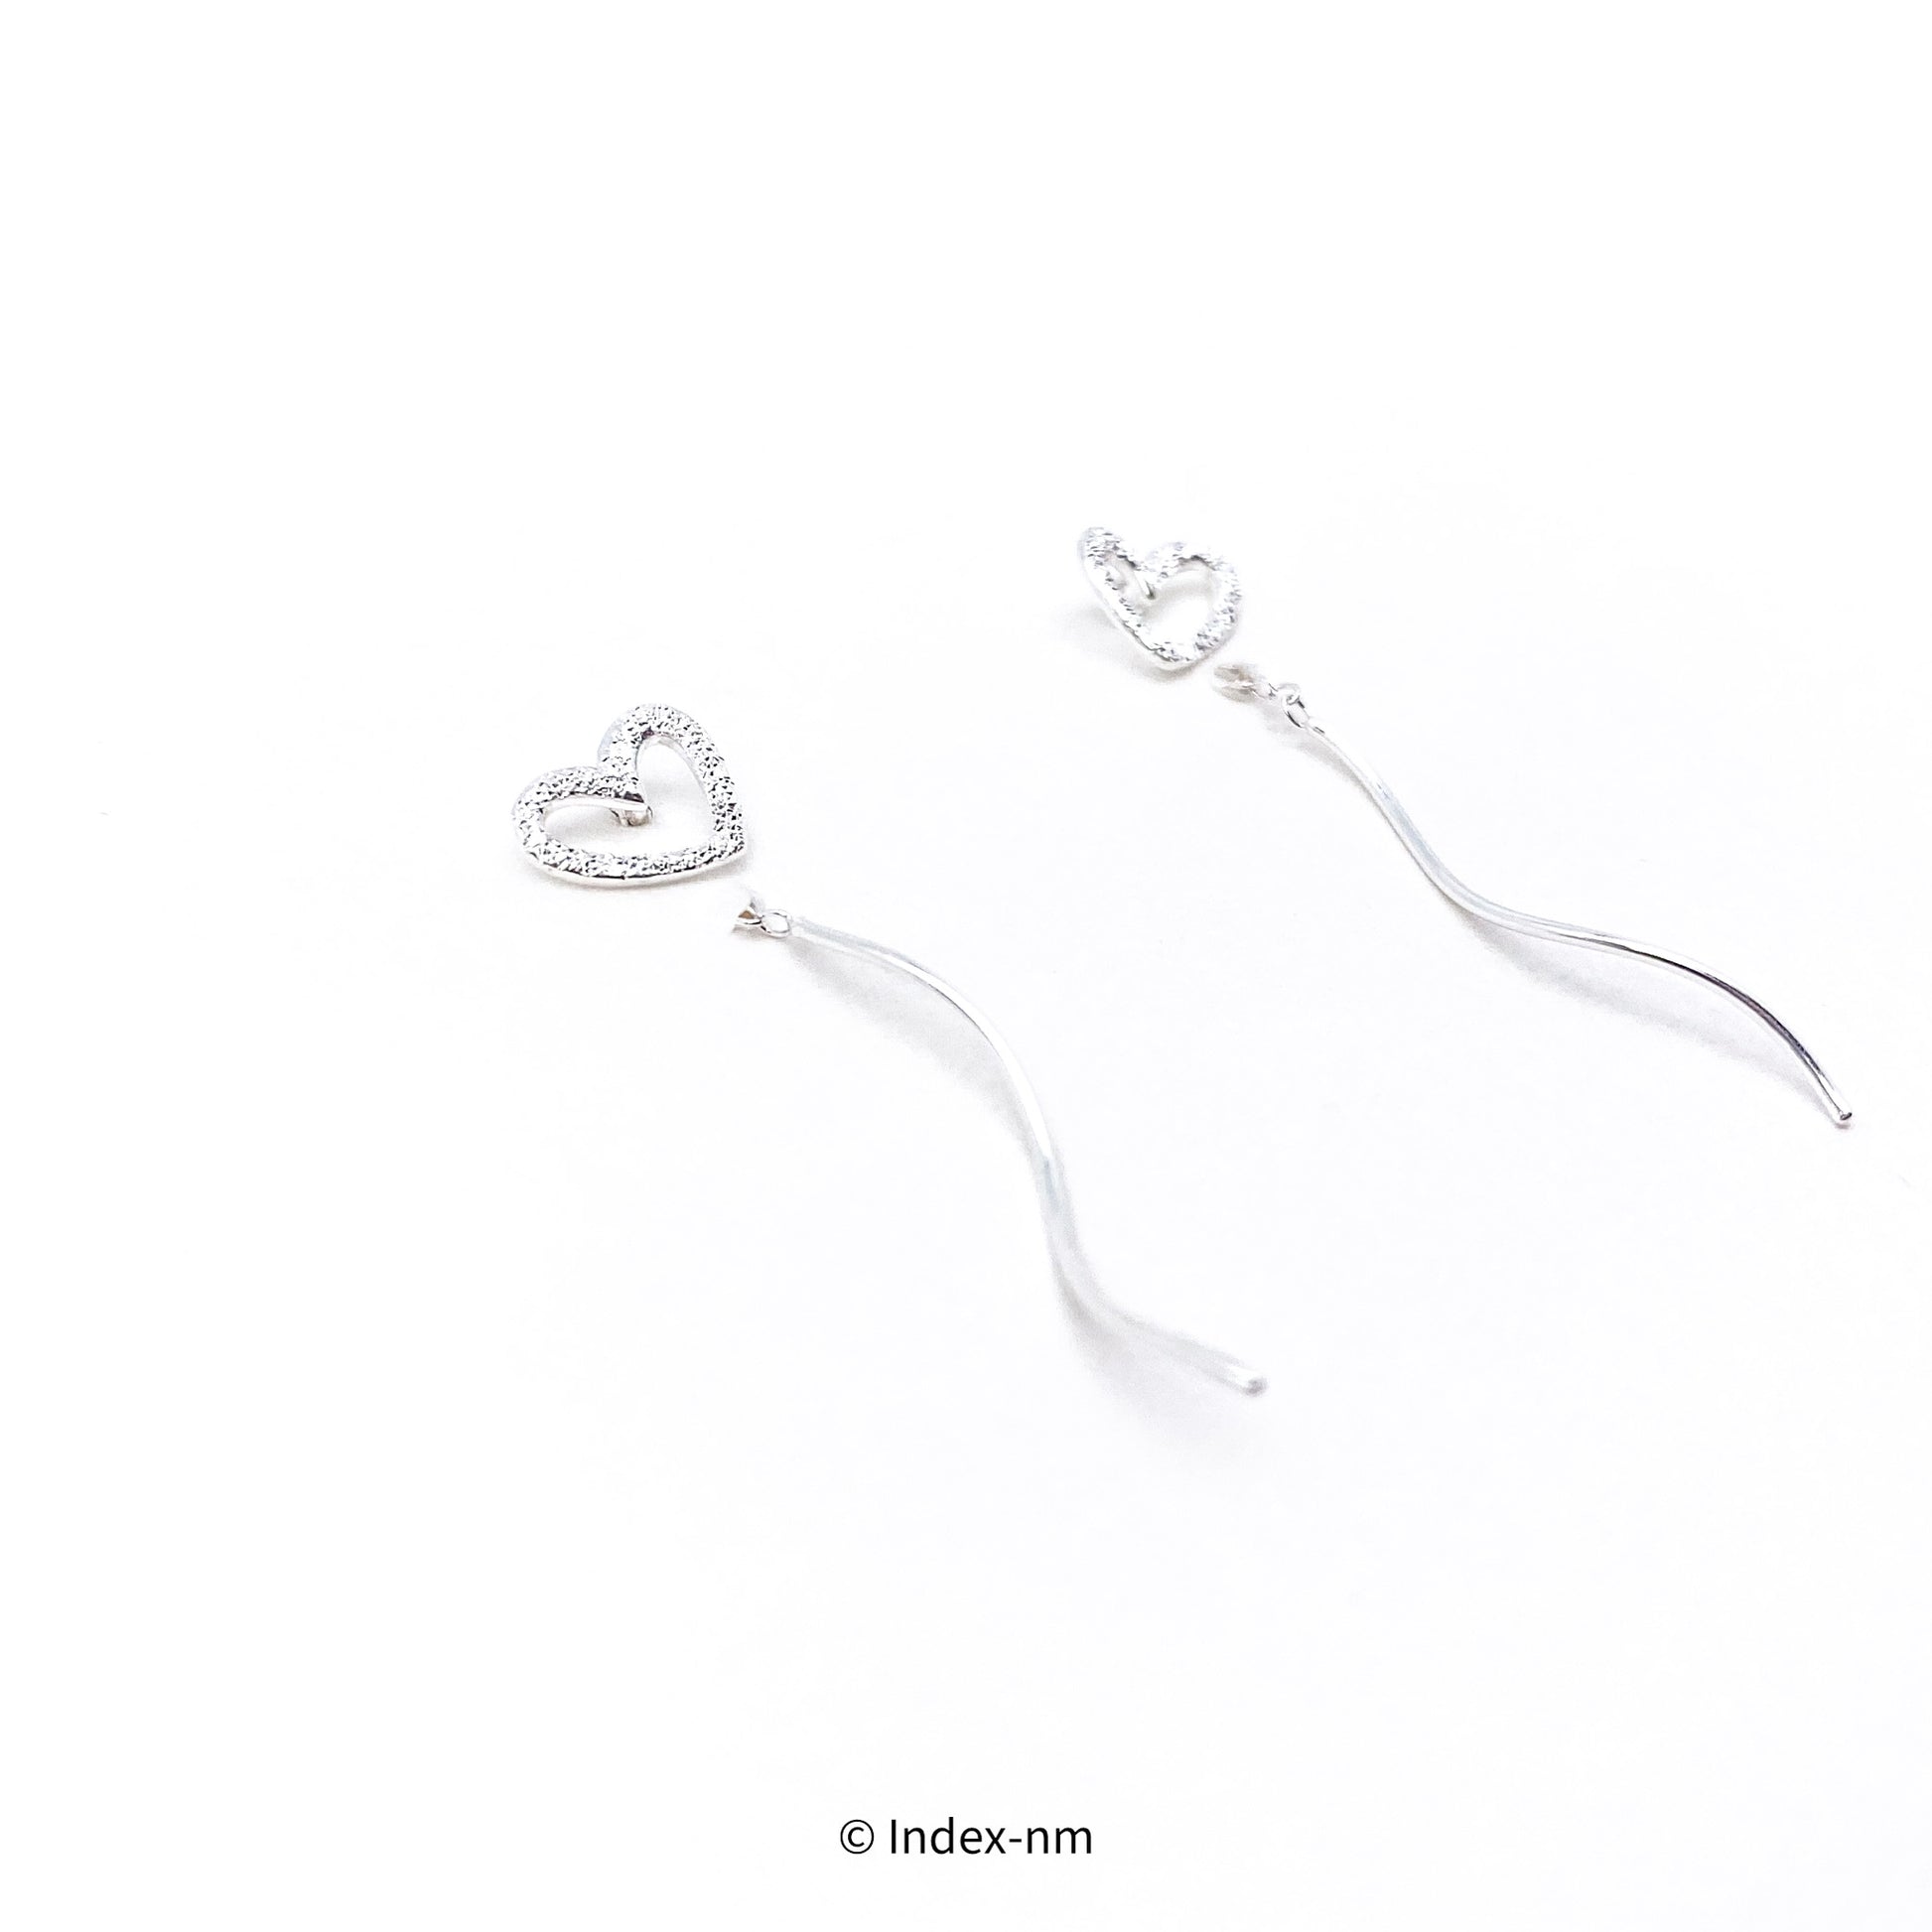 Simple Silver Heart Threader Earrings 